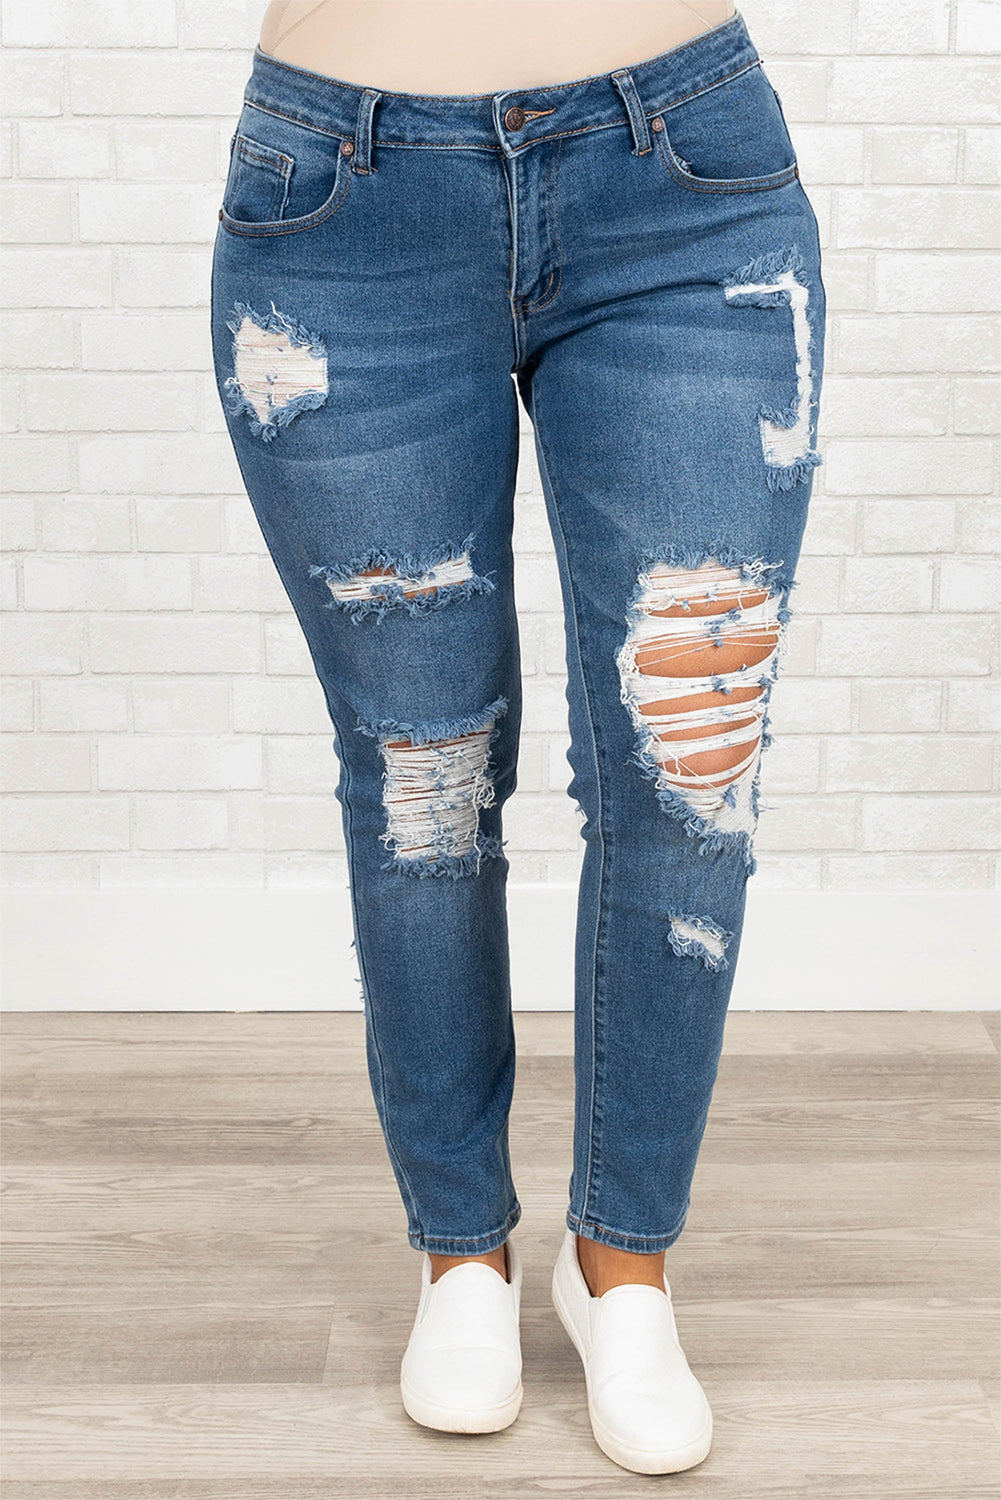 Lara Blue Distressed Ripped Skinny Jeans - The Bohemian Closet